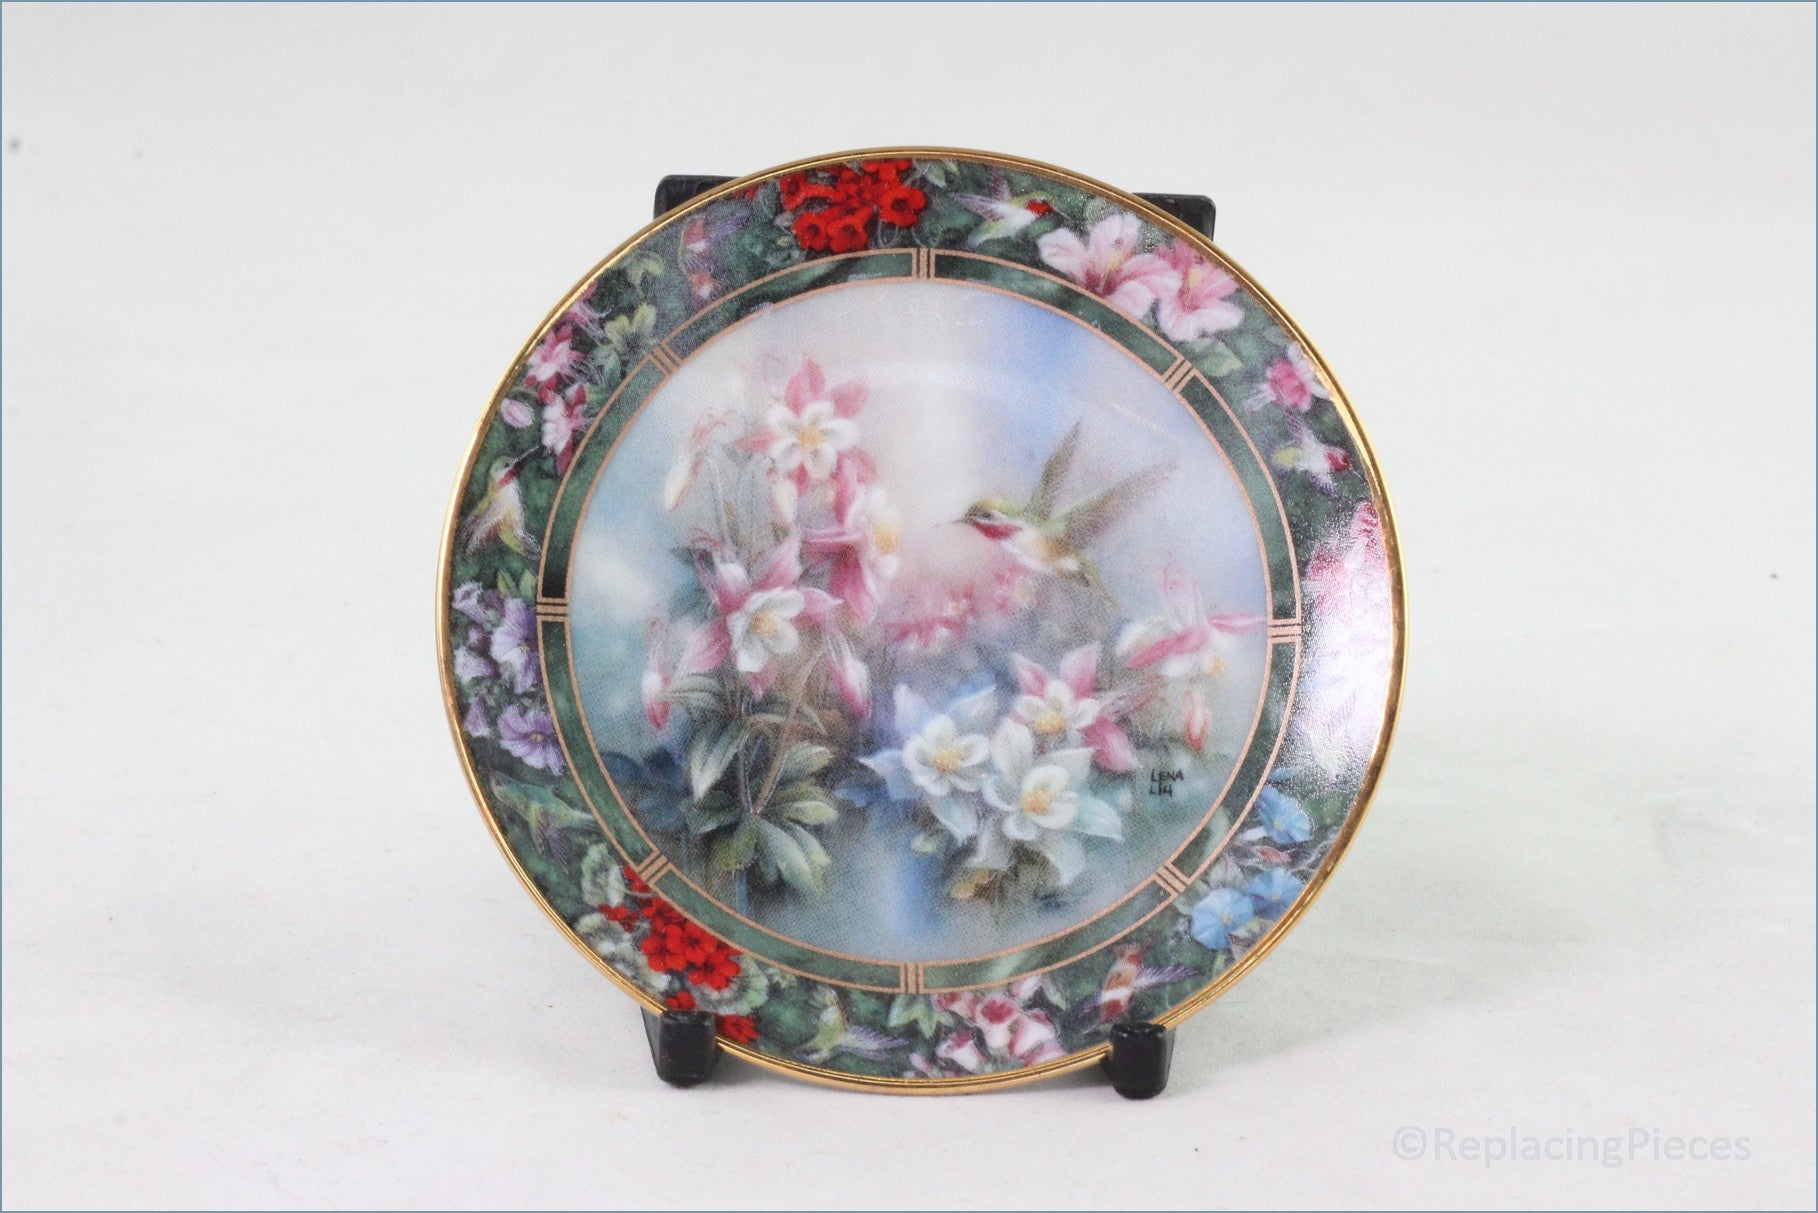 Bradford Editions - Lena Liu's Hummingbird Treasury Mini Plate Collection - Calliope Hummingbird (4th Set)